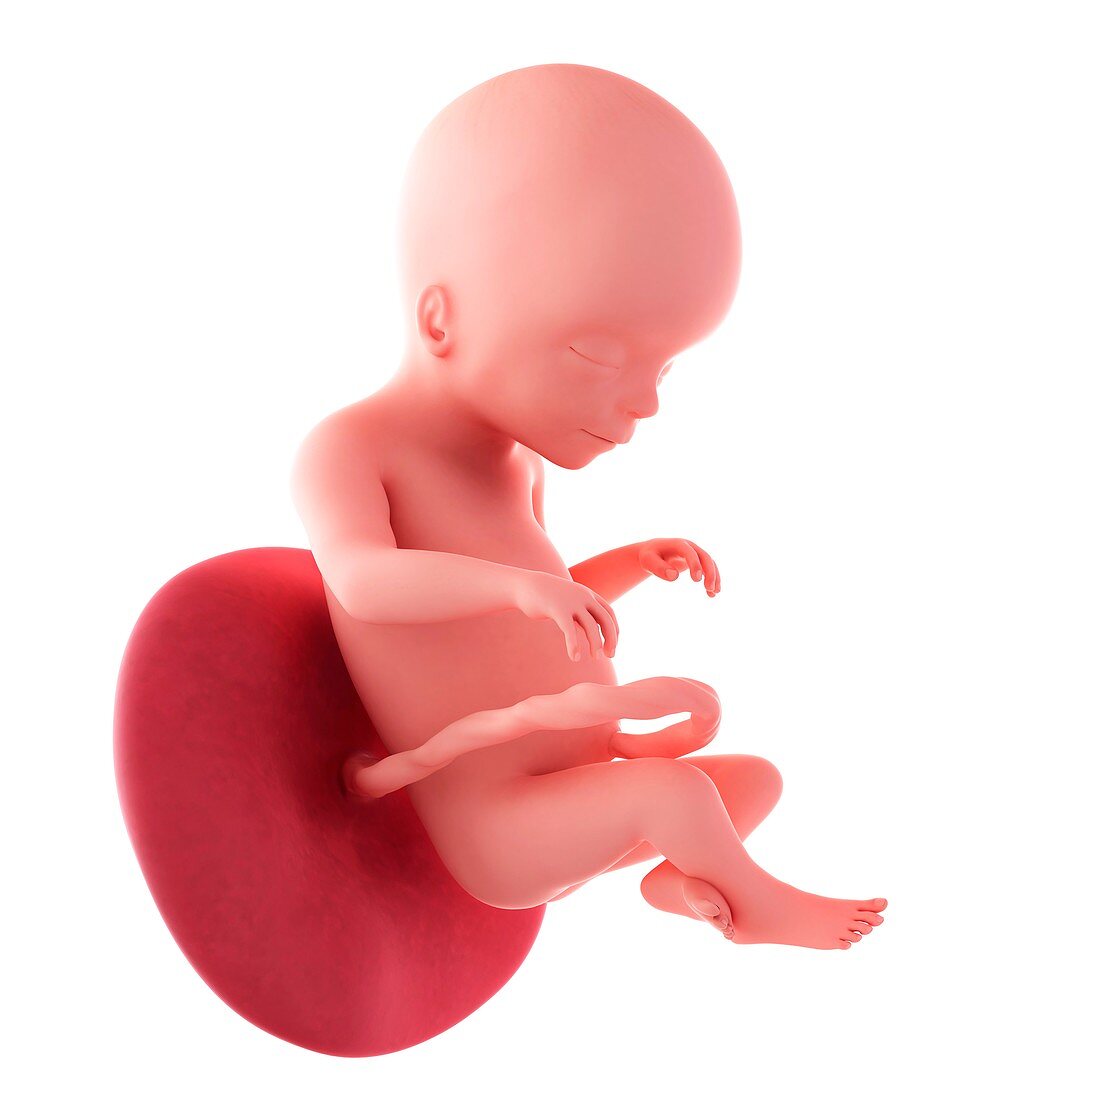 Human fetus age 20 weeks